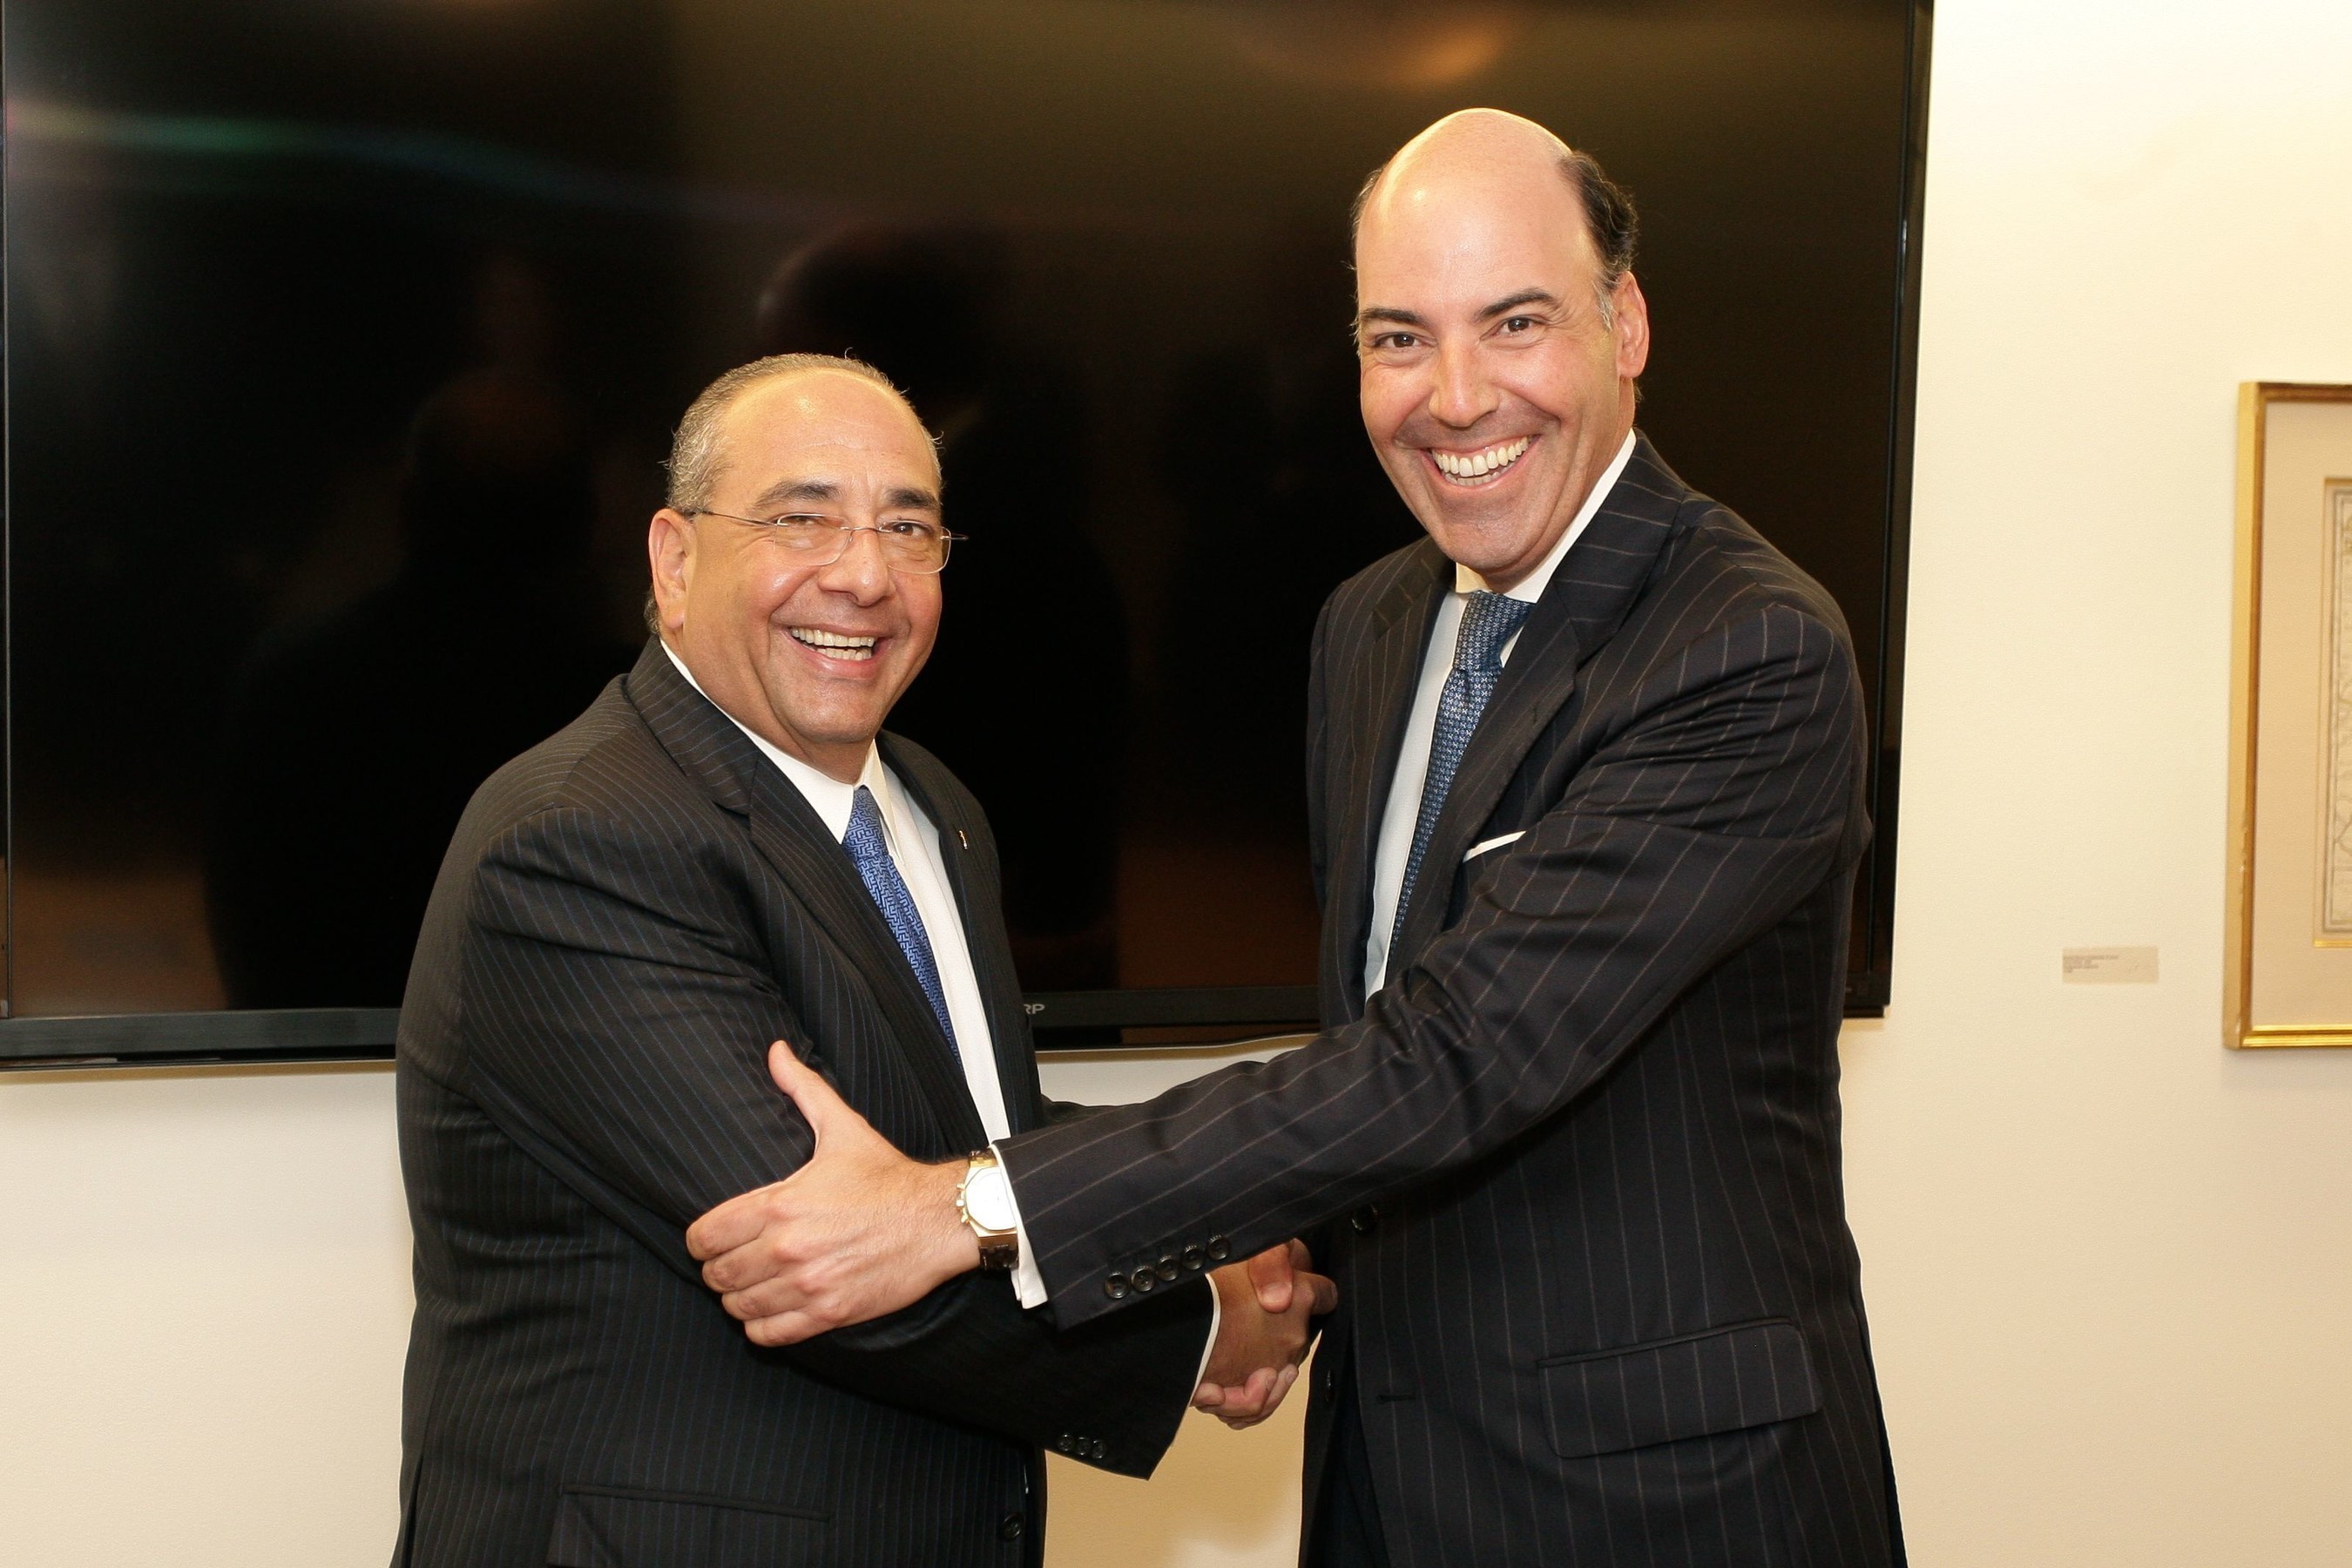 Grupo Financiero Ficohsa CEO, Camilo Atala, and Citi Latin America CEO, Francisco Aristeguieta at the signing of the agreement.